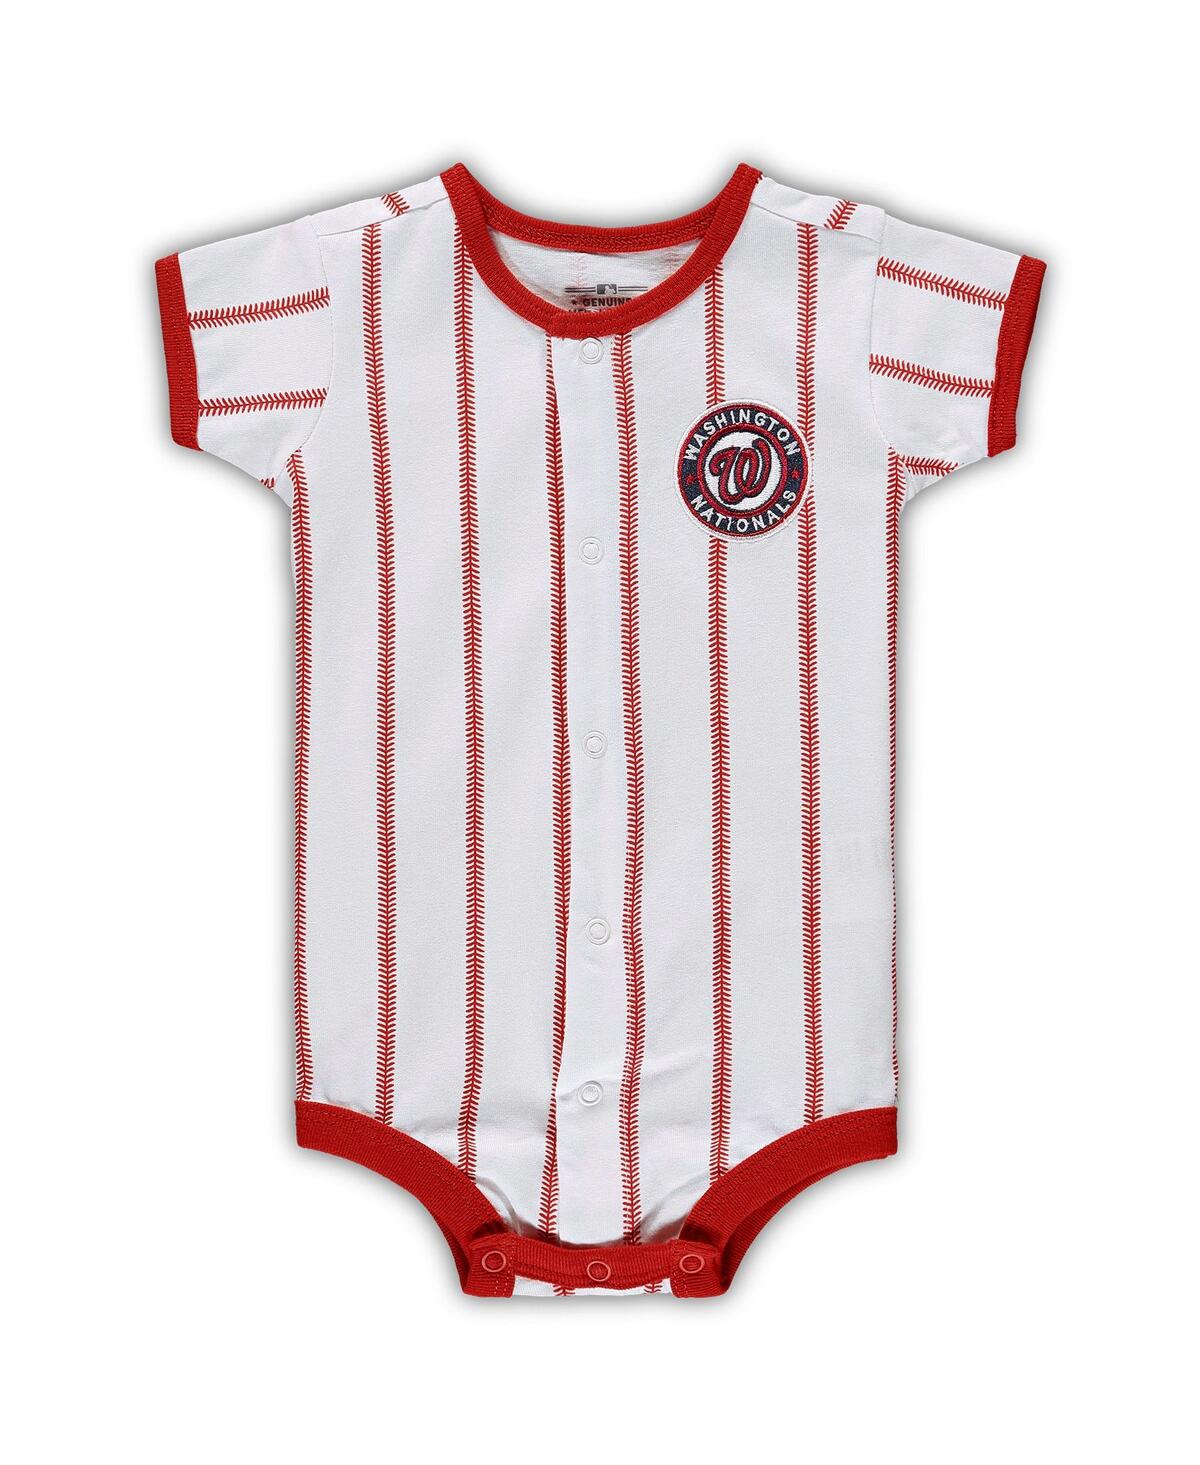 Lids Washington Nationals Infant Position Player T-Shirt & Shorts Set -  White/Red